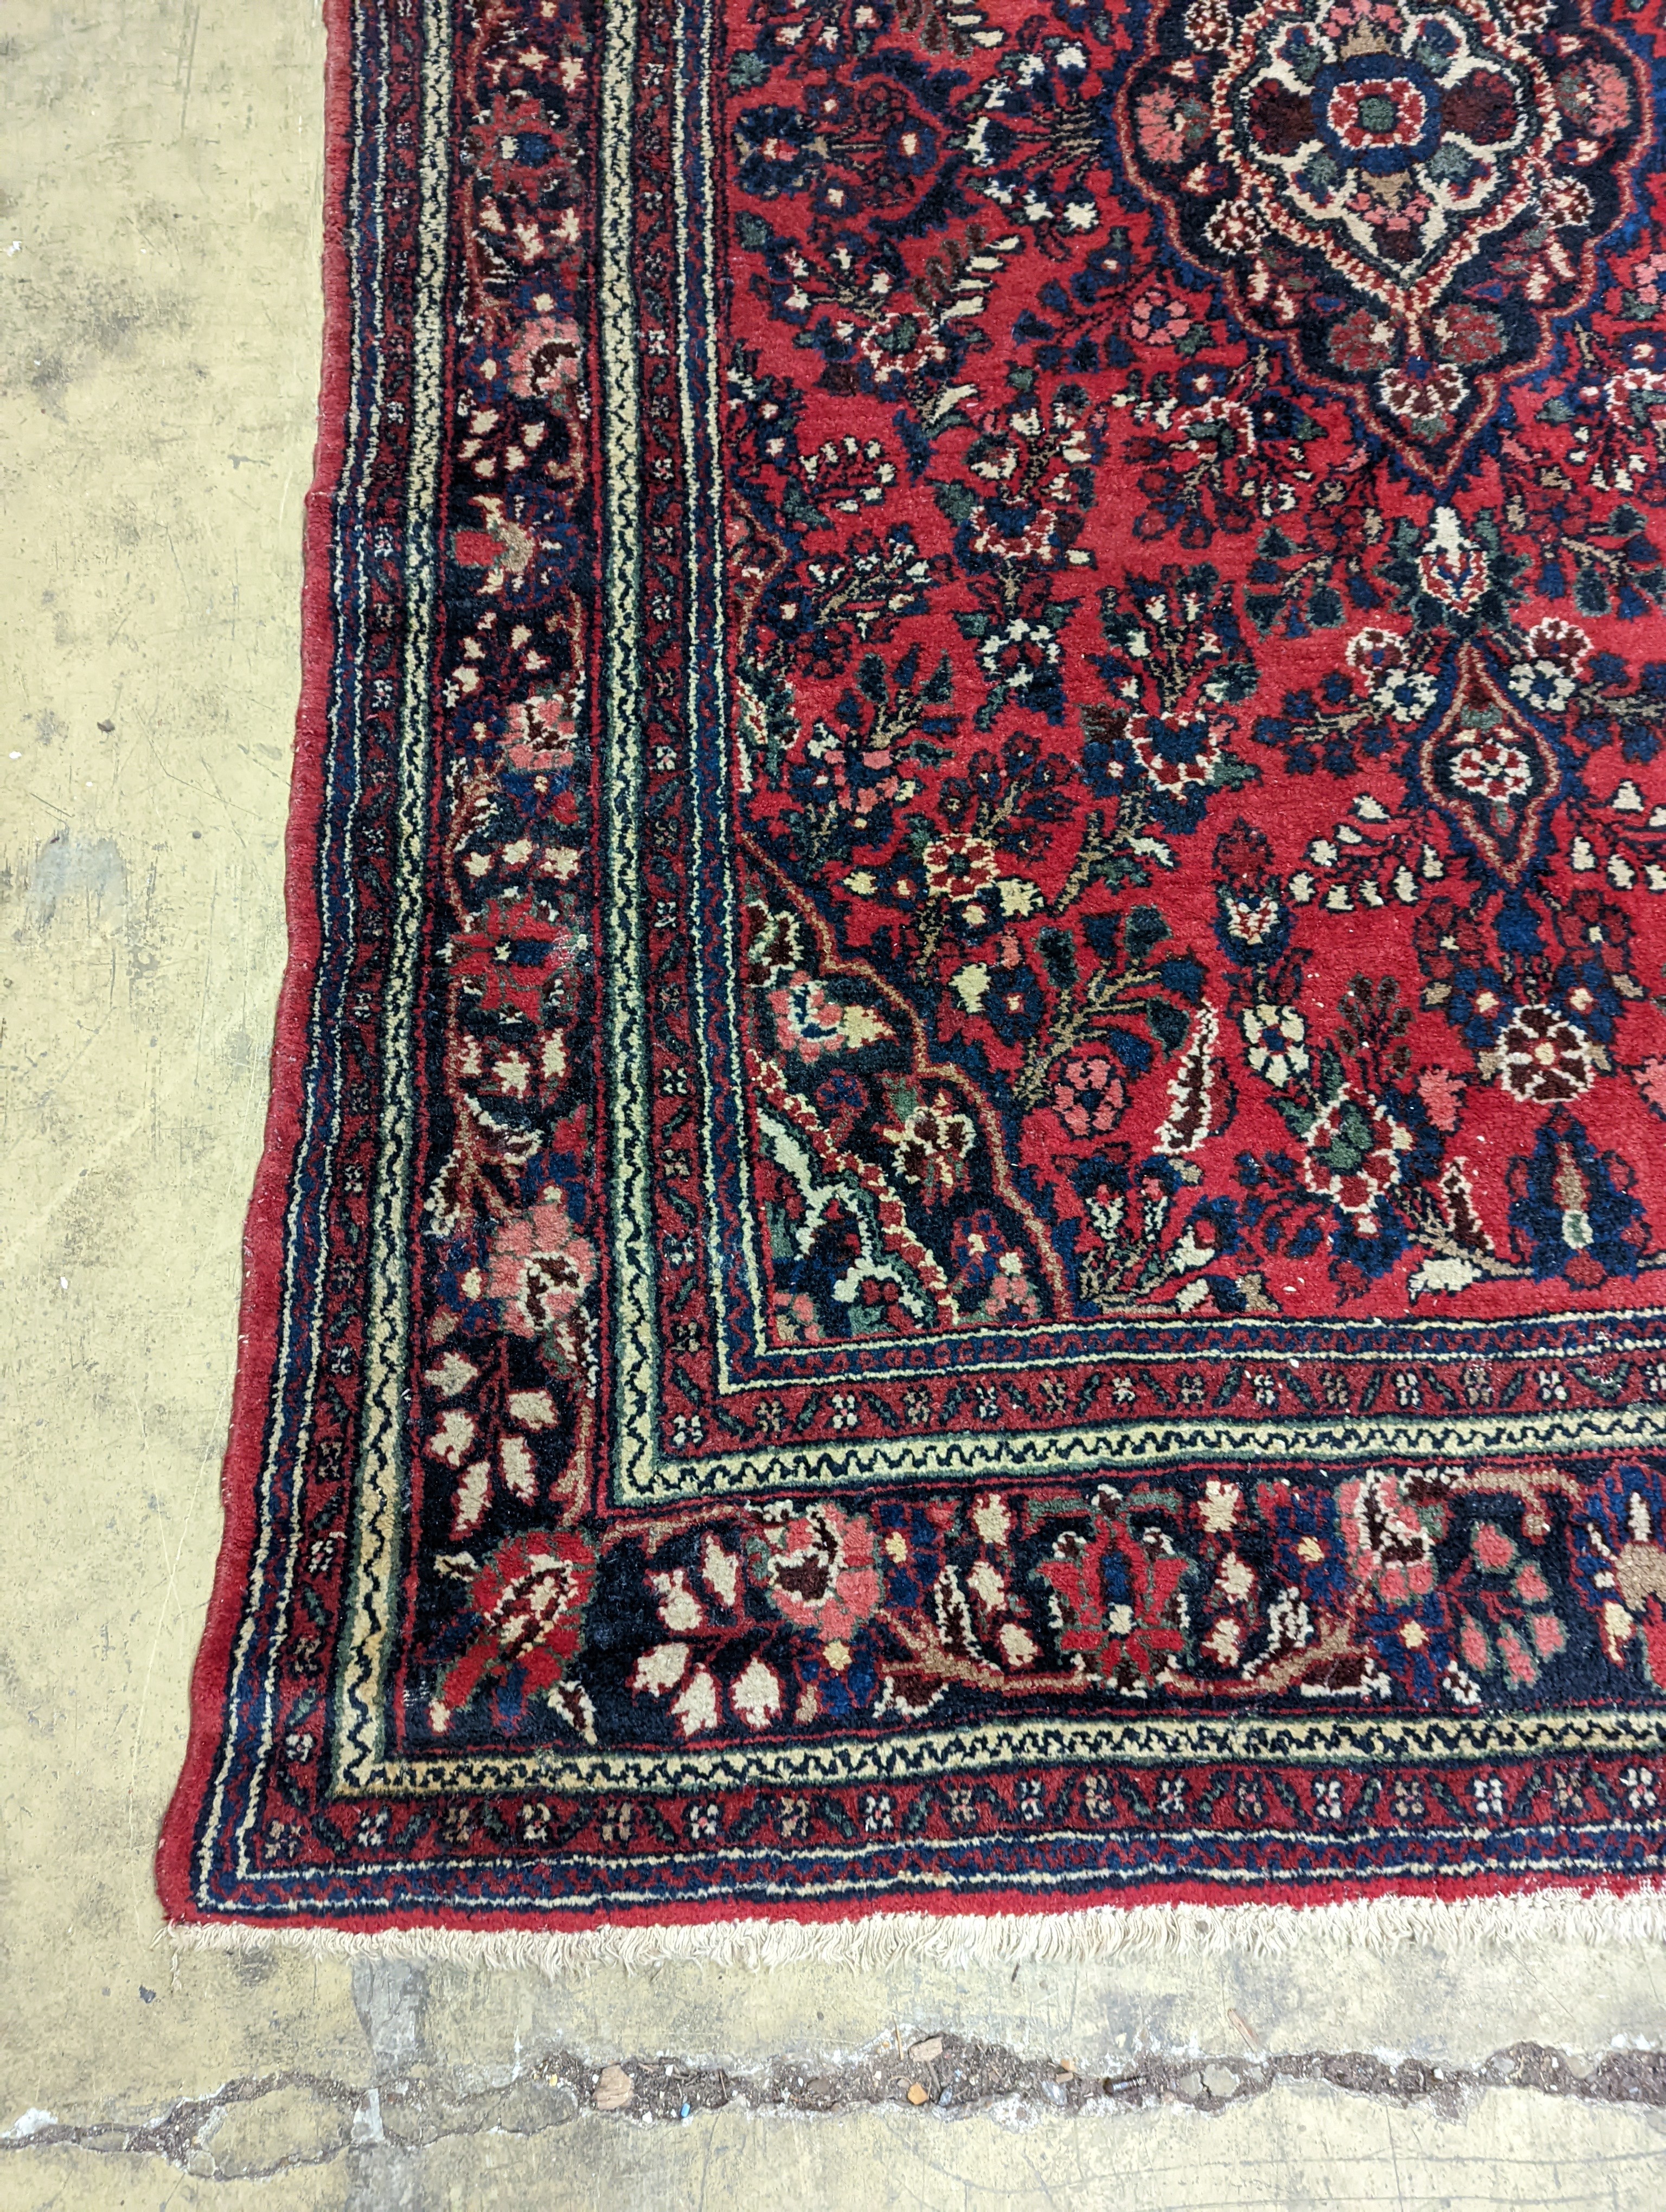 A Tabriz style red ground carpet, 290 x 190cm